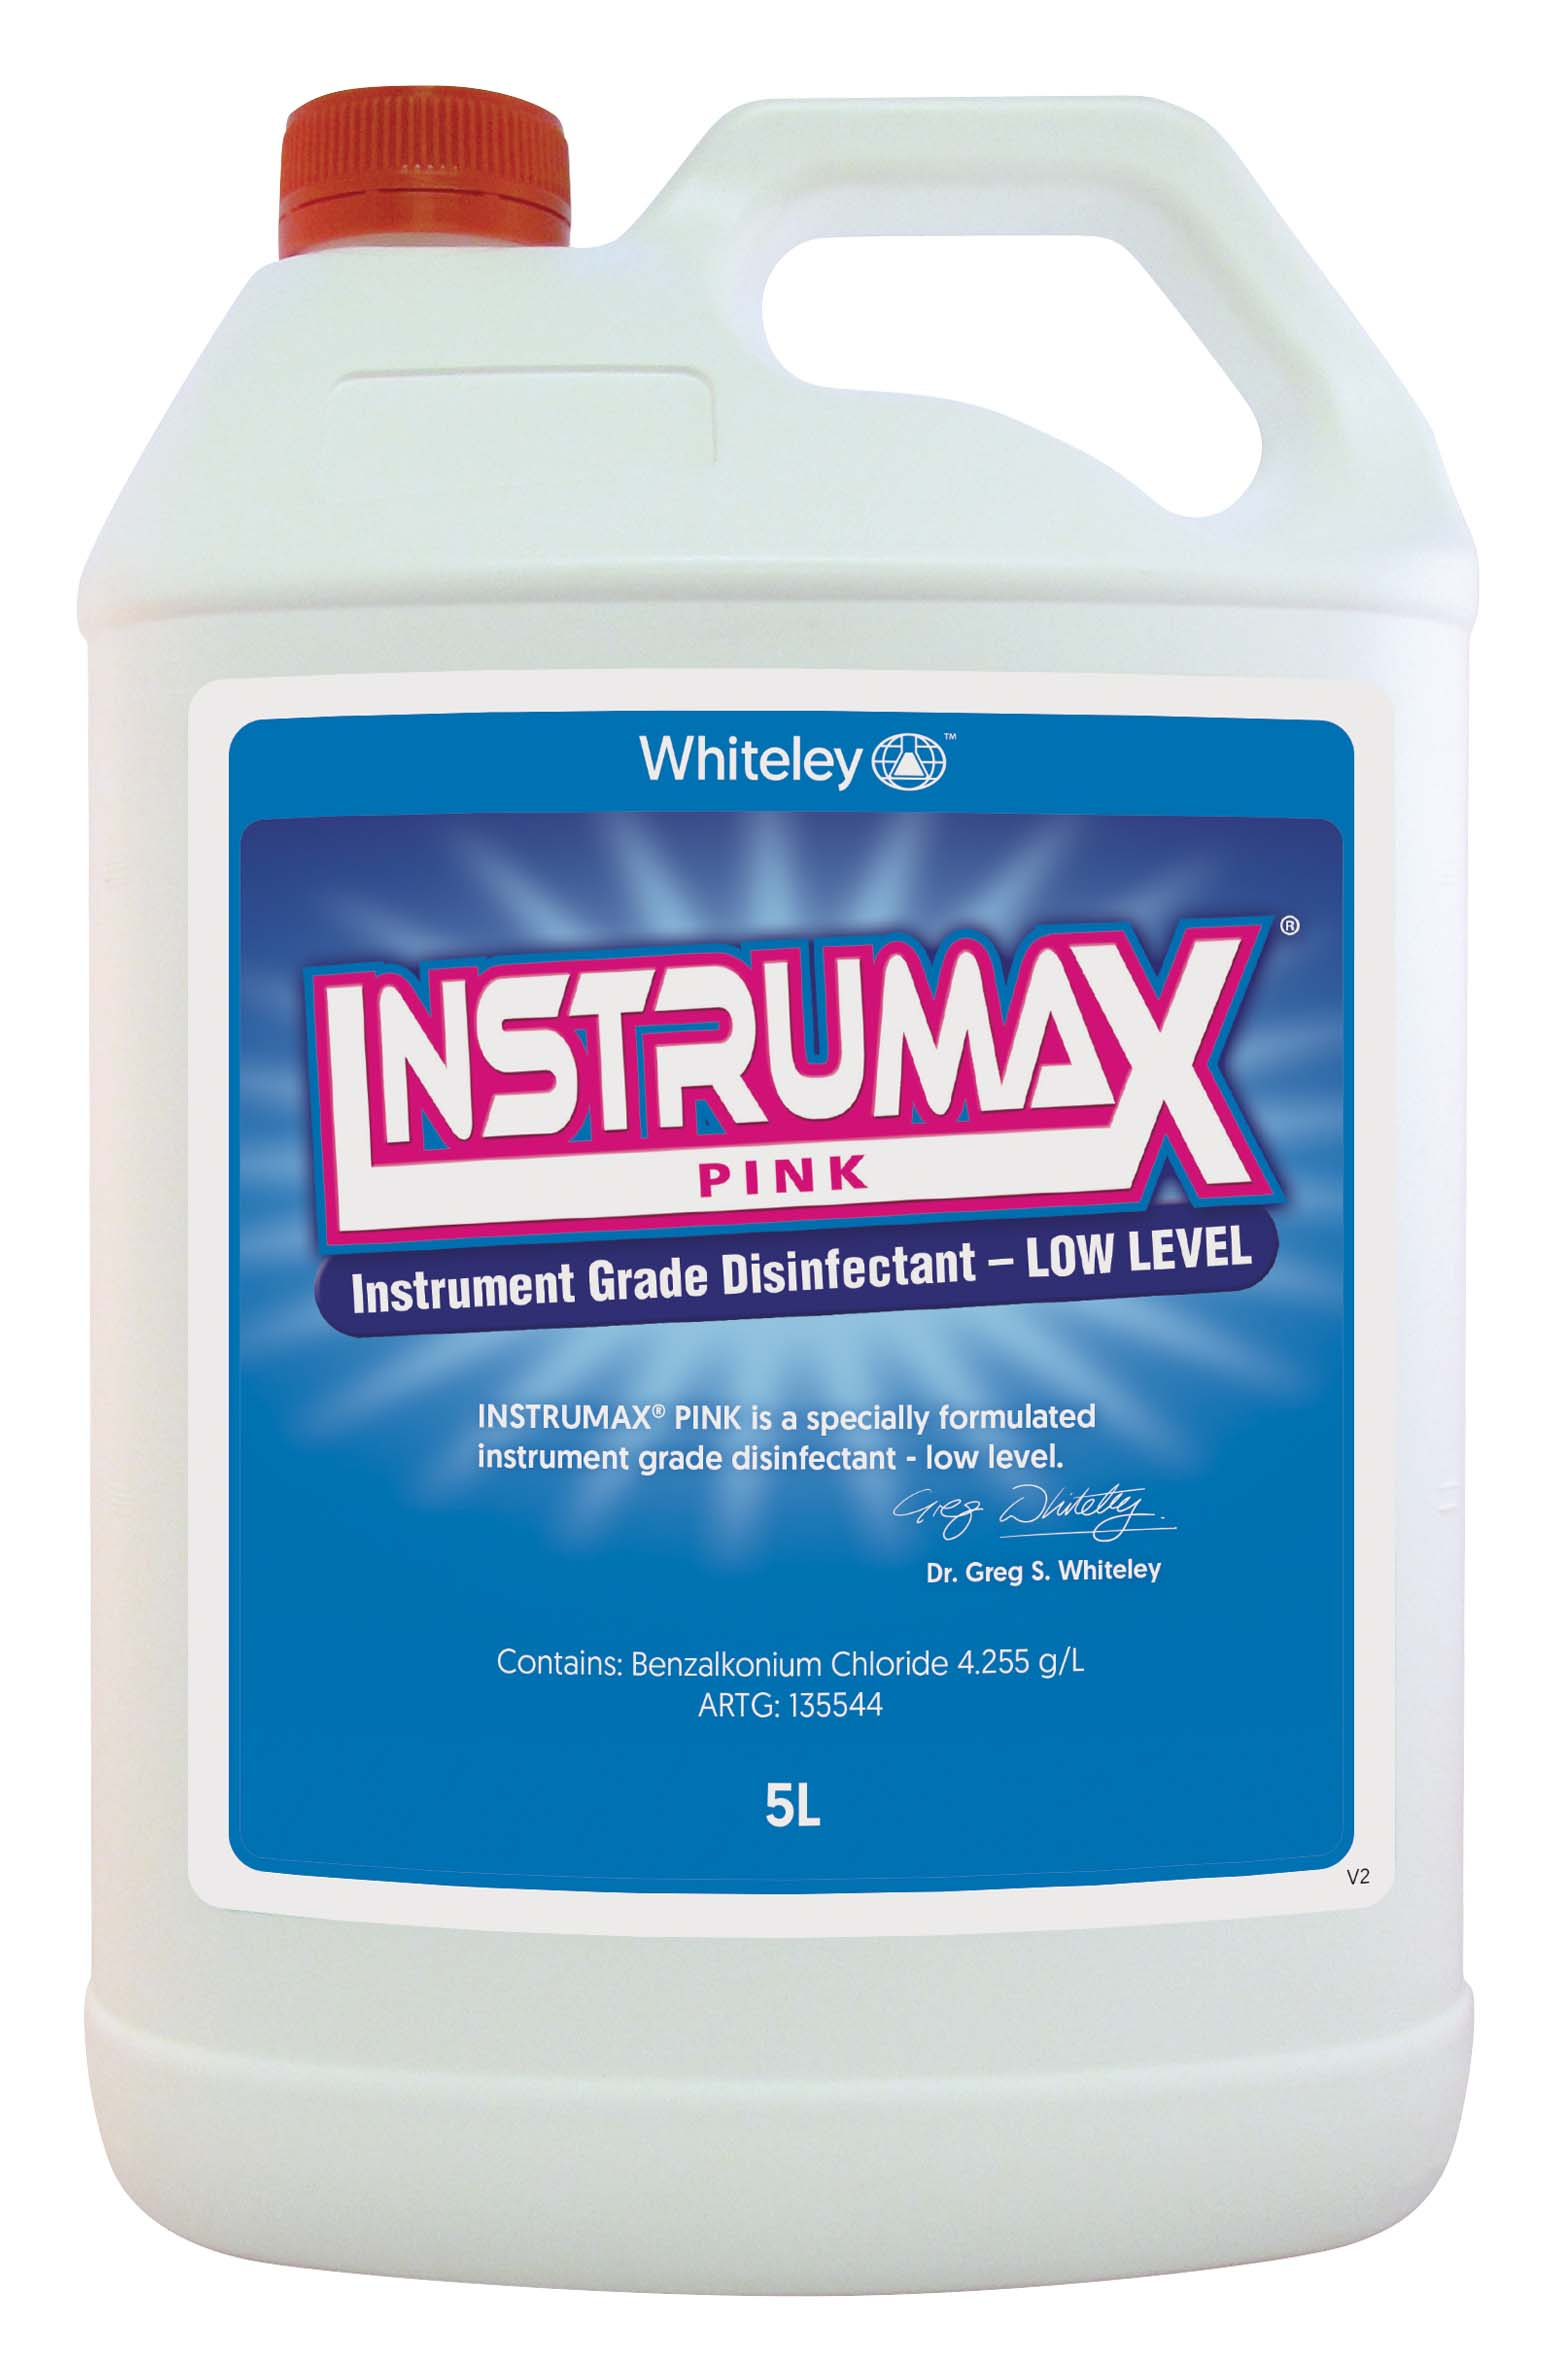 Whiteley Instrumax Pink Instrument disinfectant 5 Litre image 0